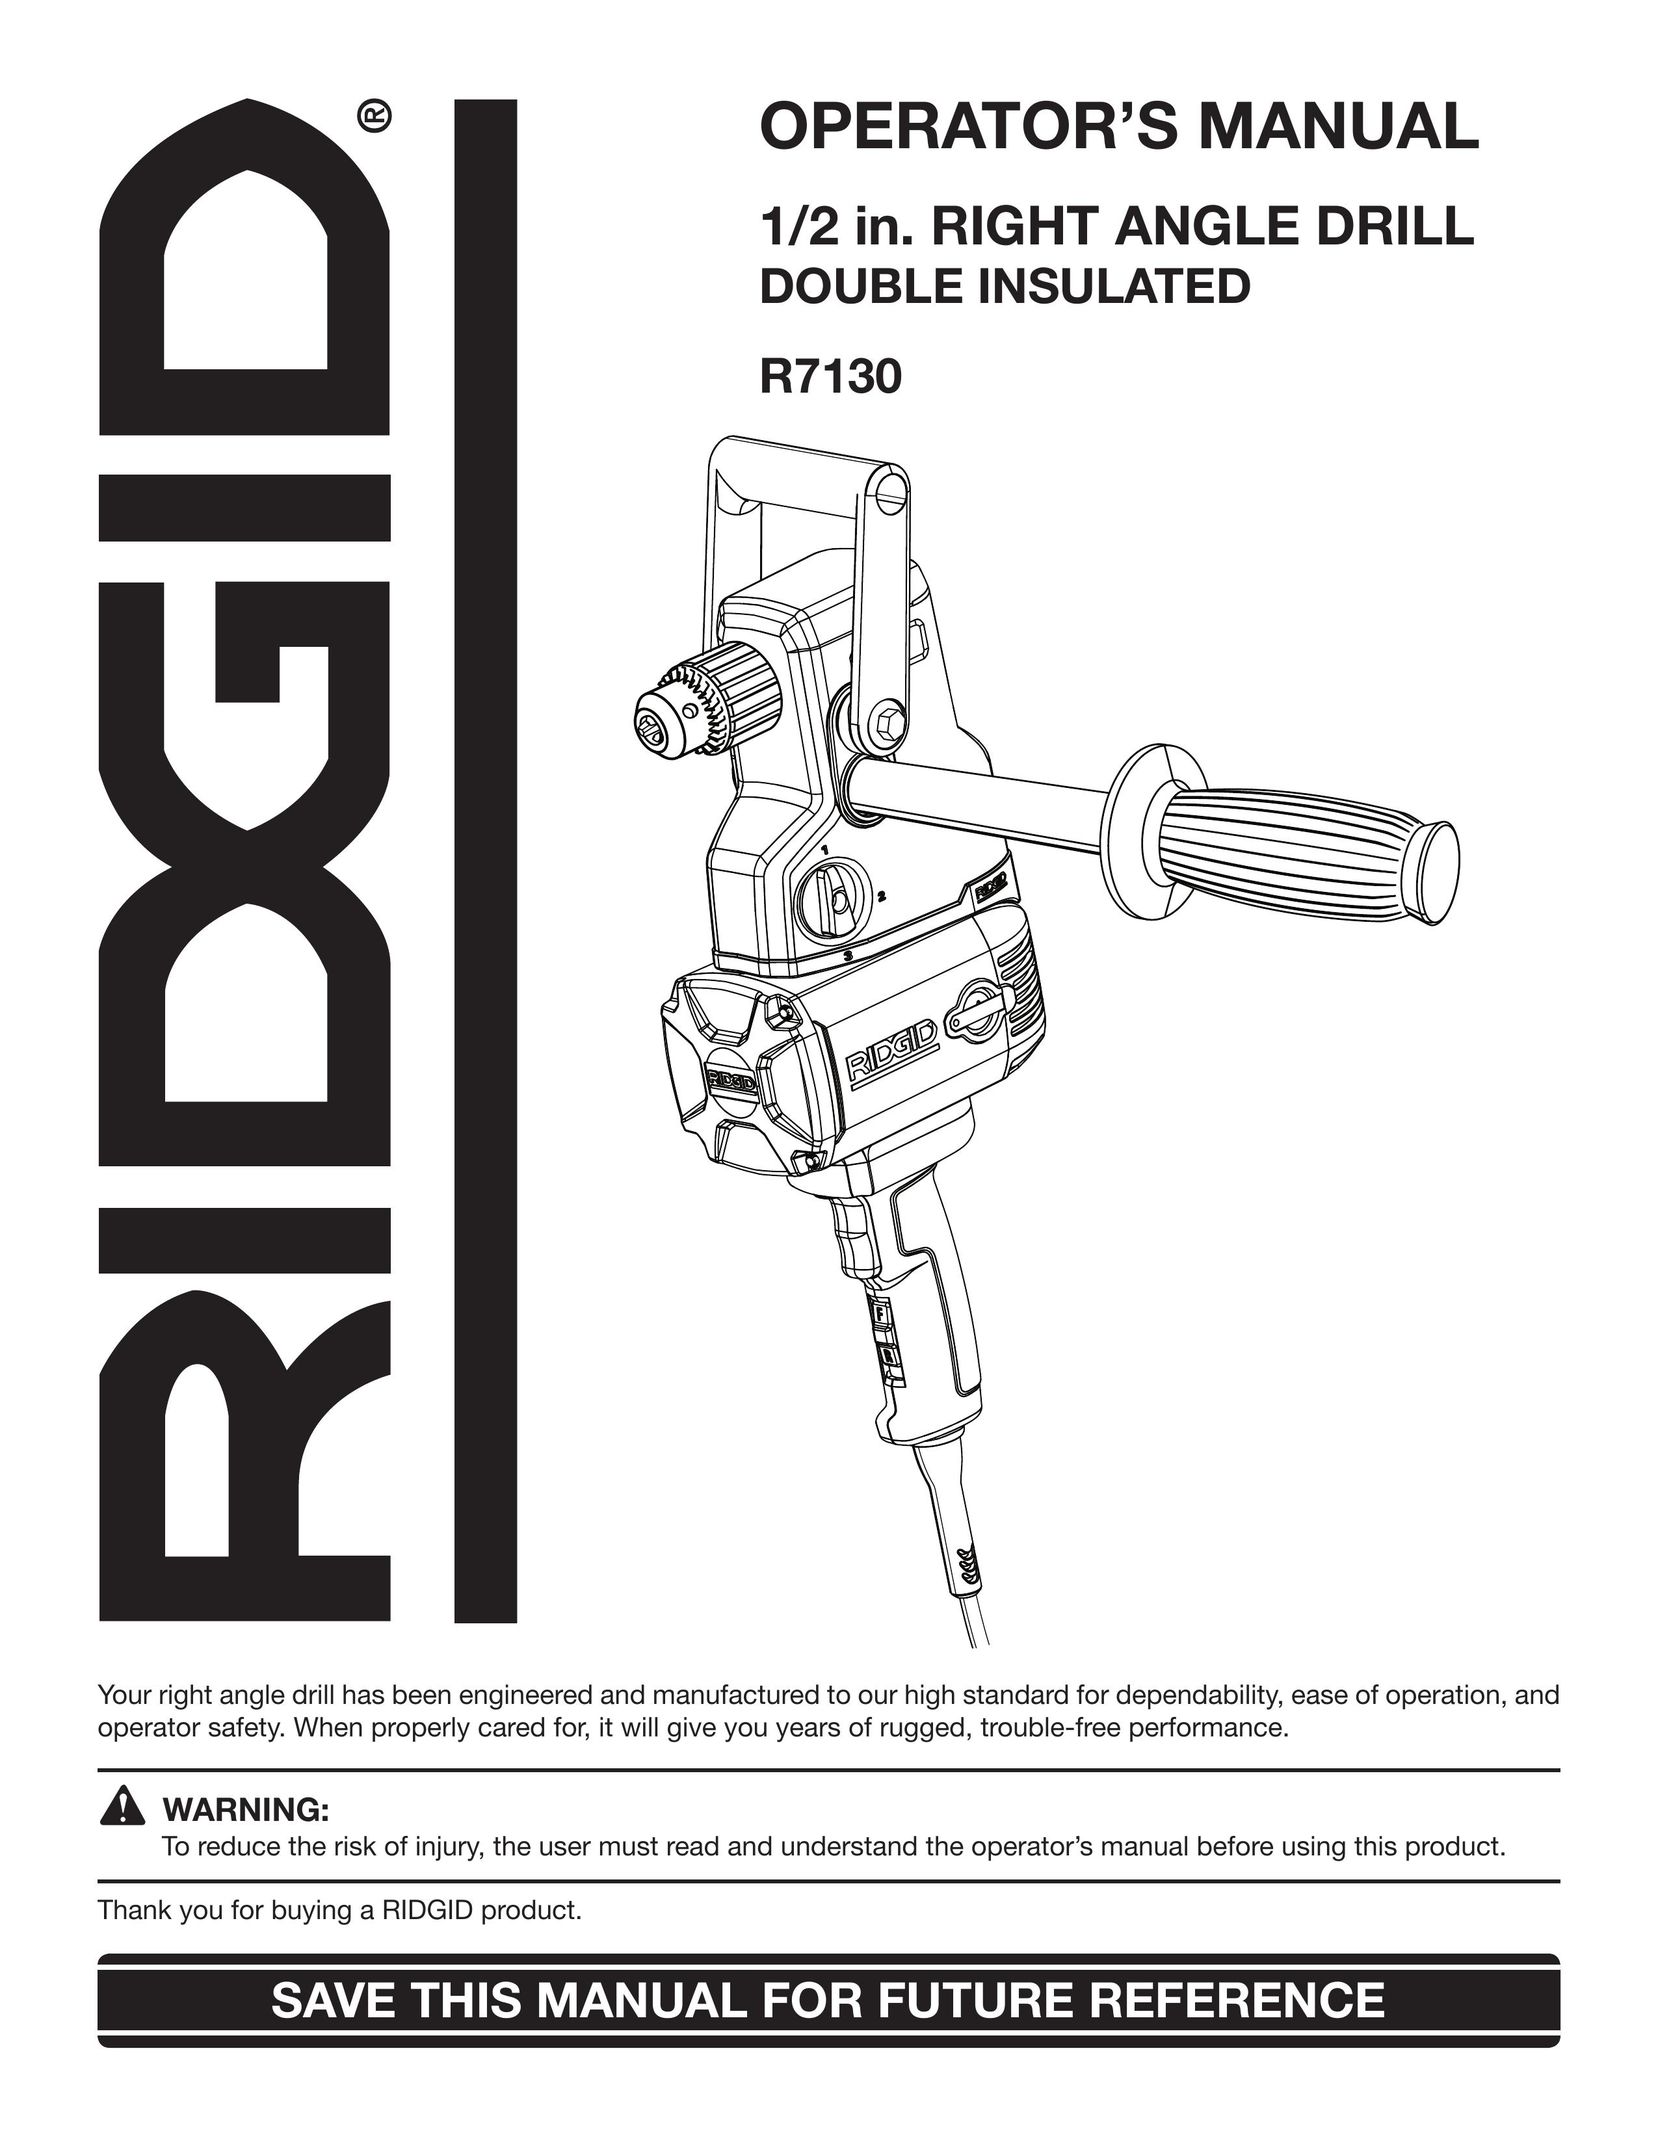 RIDGID R7130 Drill User Manual